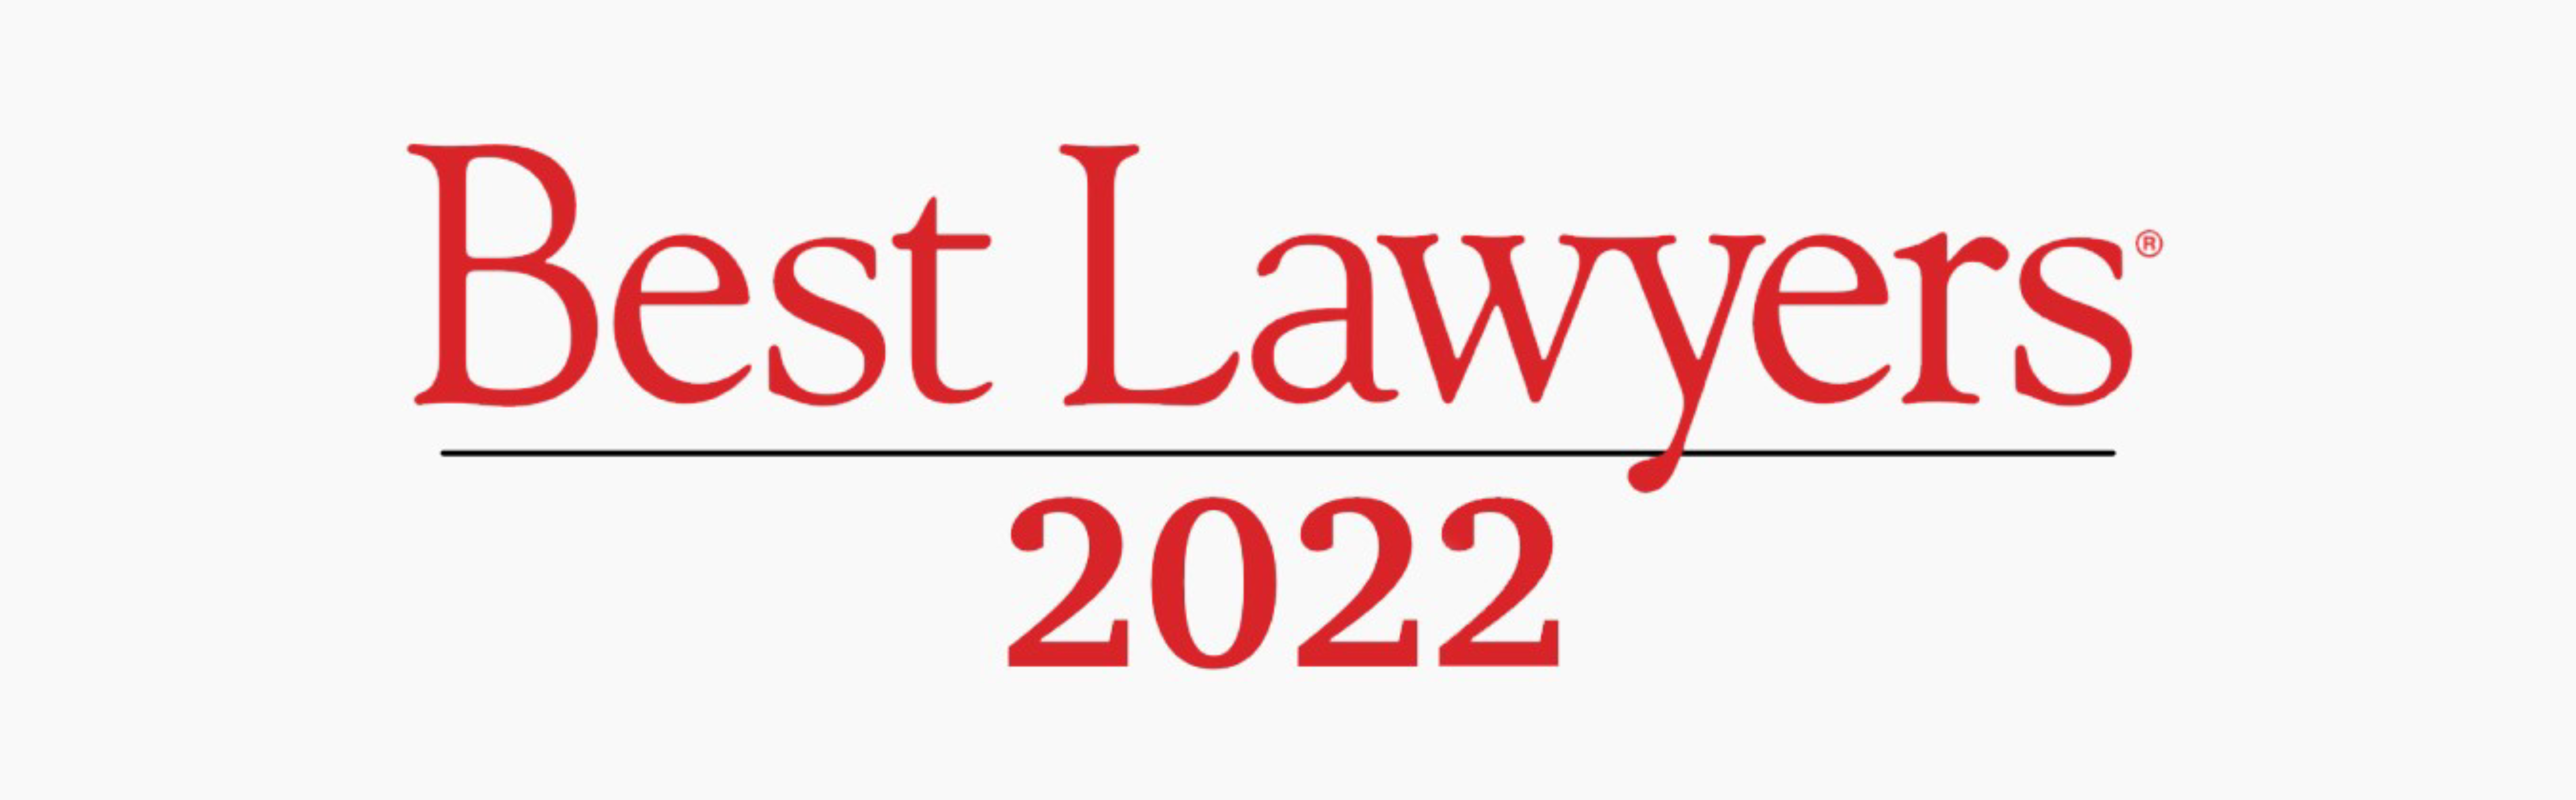 Best Lawyers 2022 Logo